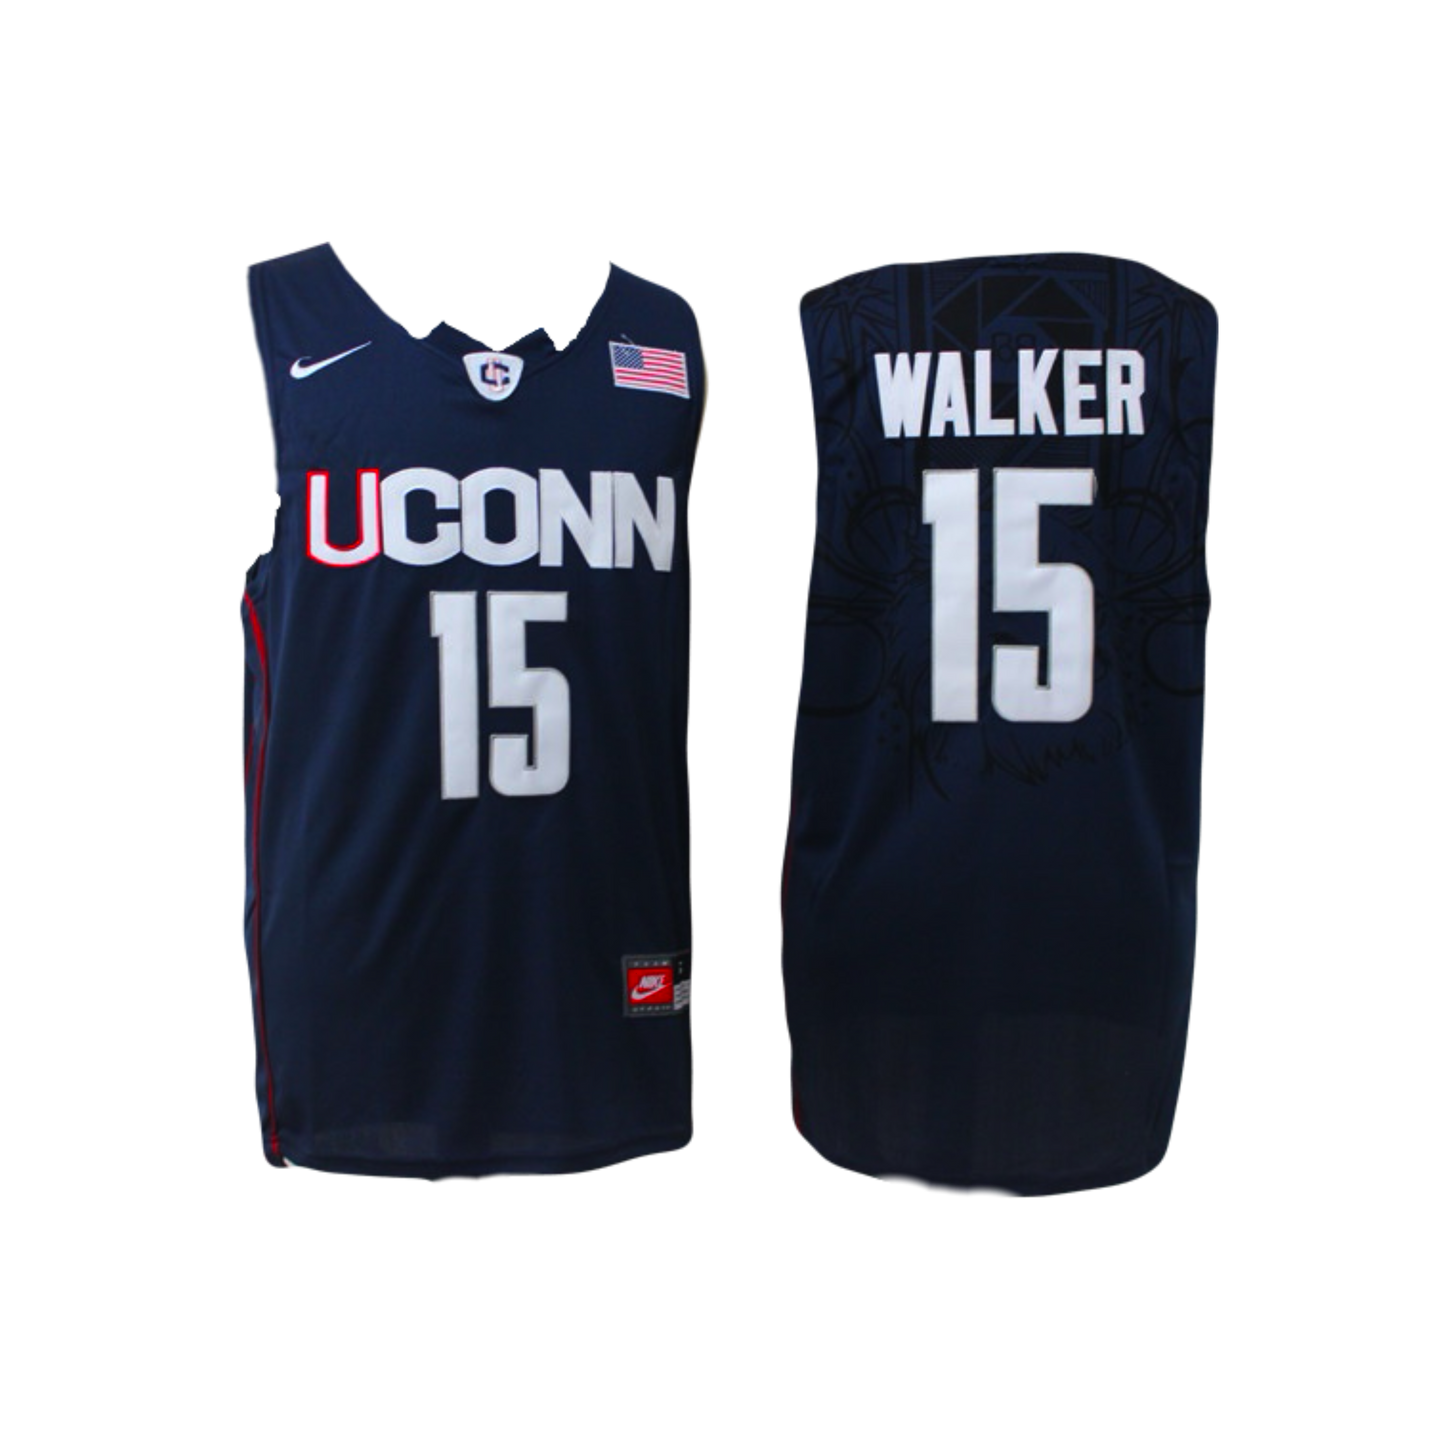 UConn Huskies Kemba Walker 2013 NCAA College Basketball Campus Legends Jersey